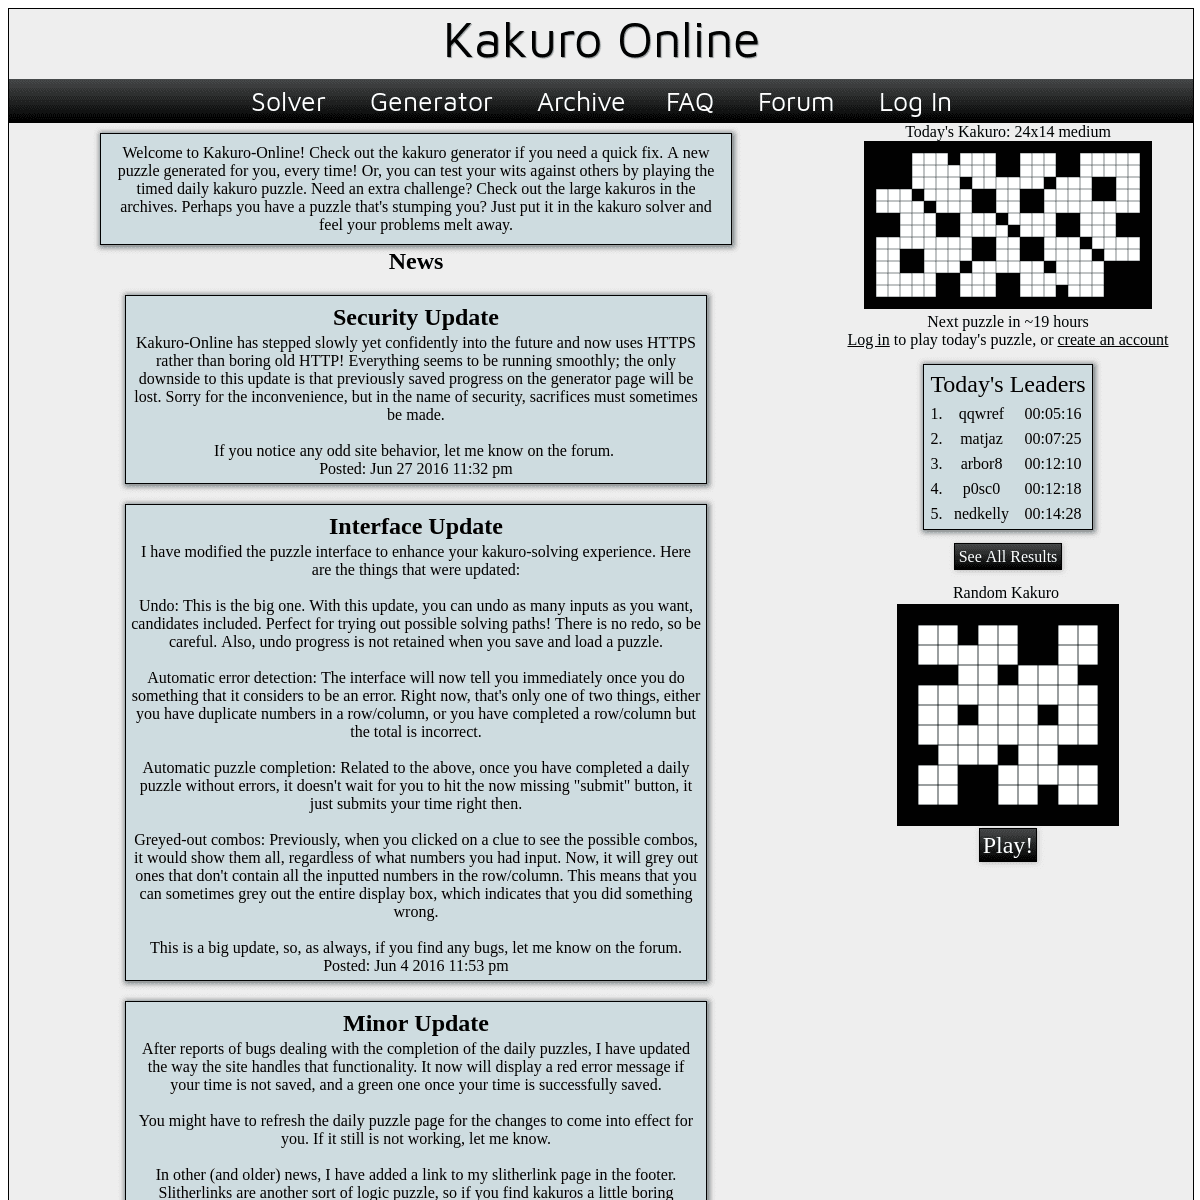 A complete backup of kakuro-online.com